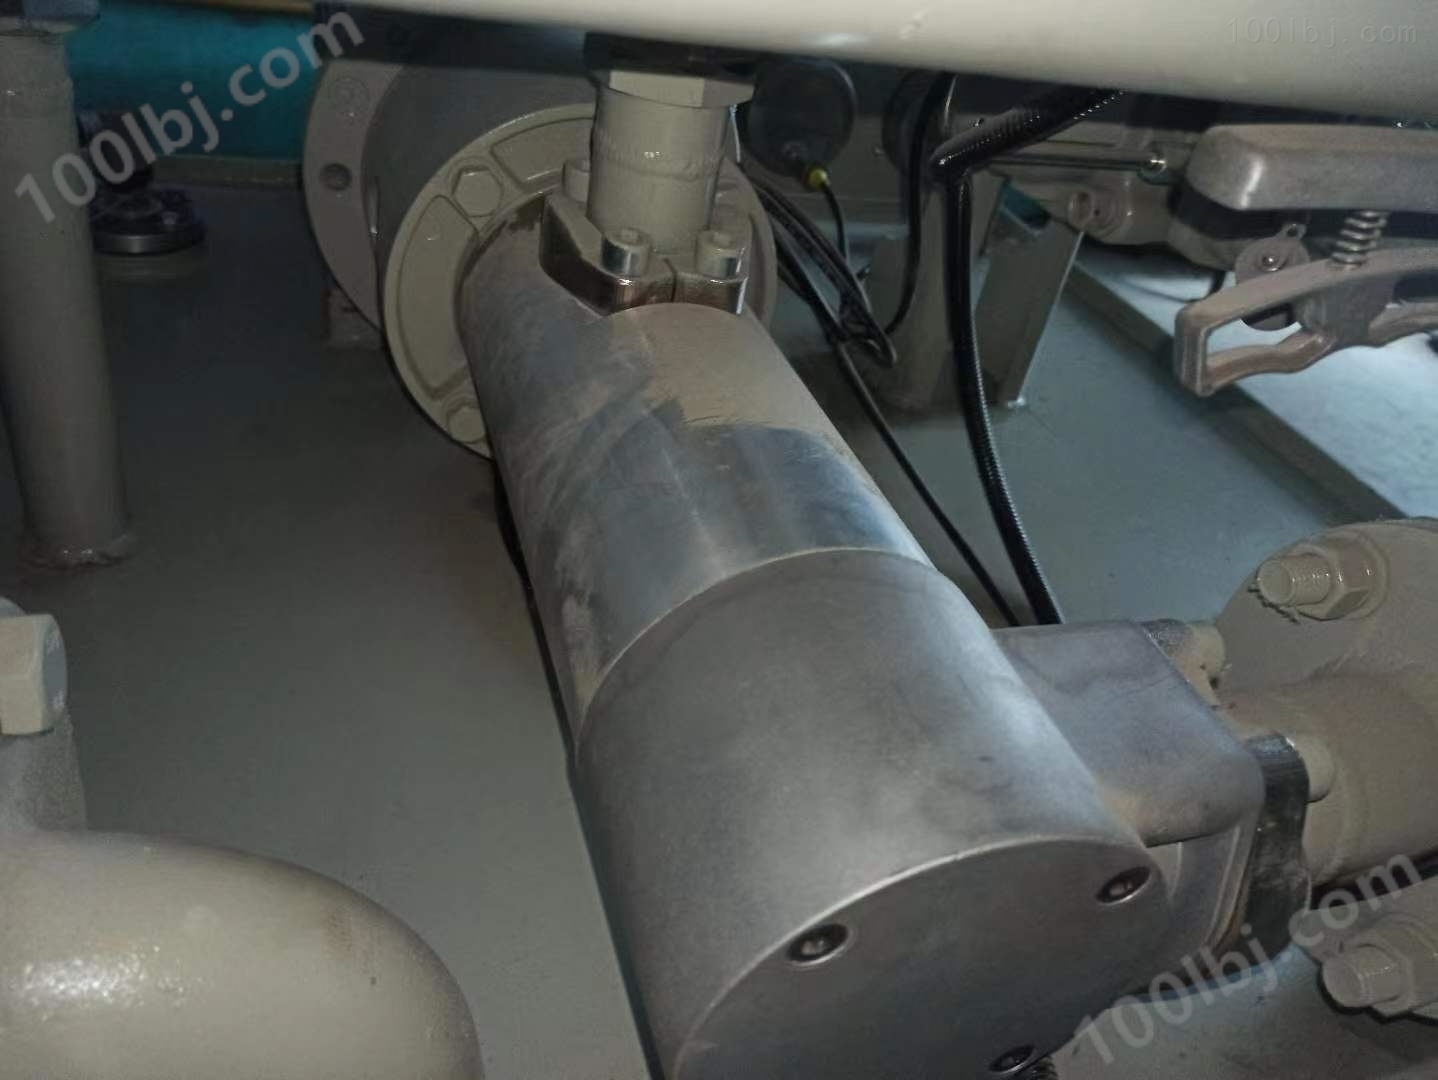 ZNYB01023302防爆稀油站低压螺杆泵